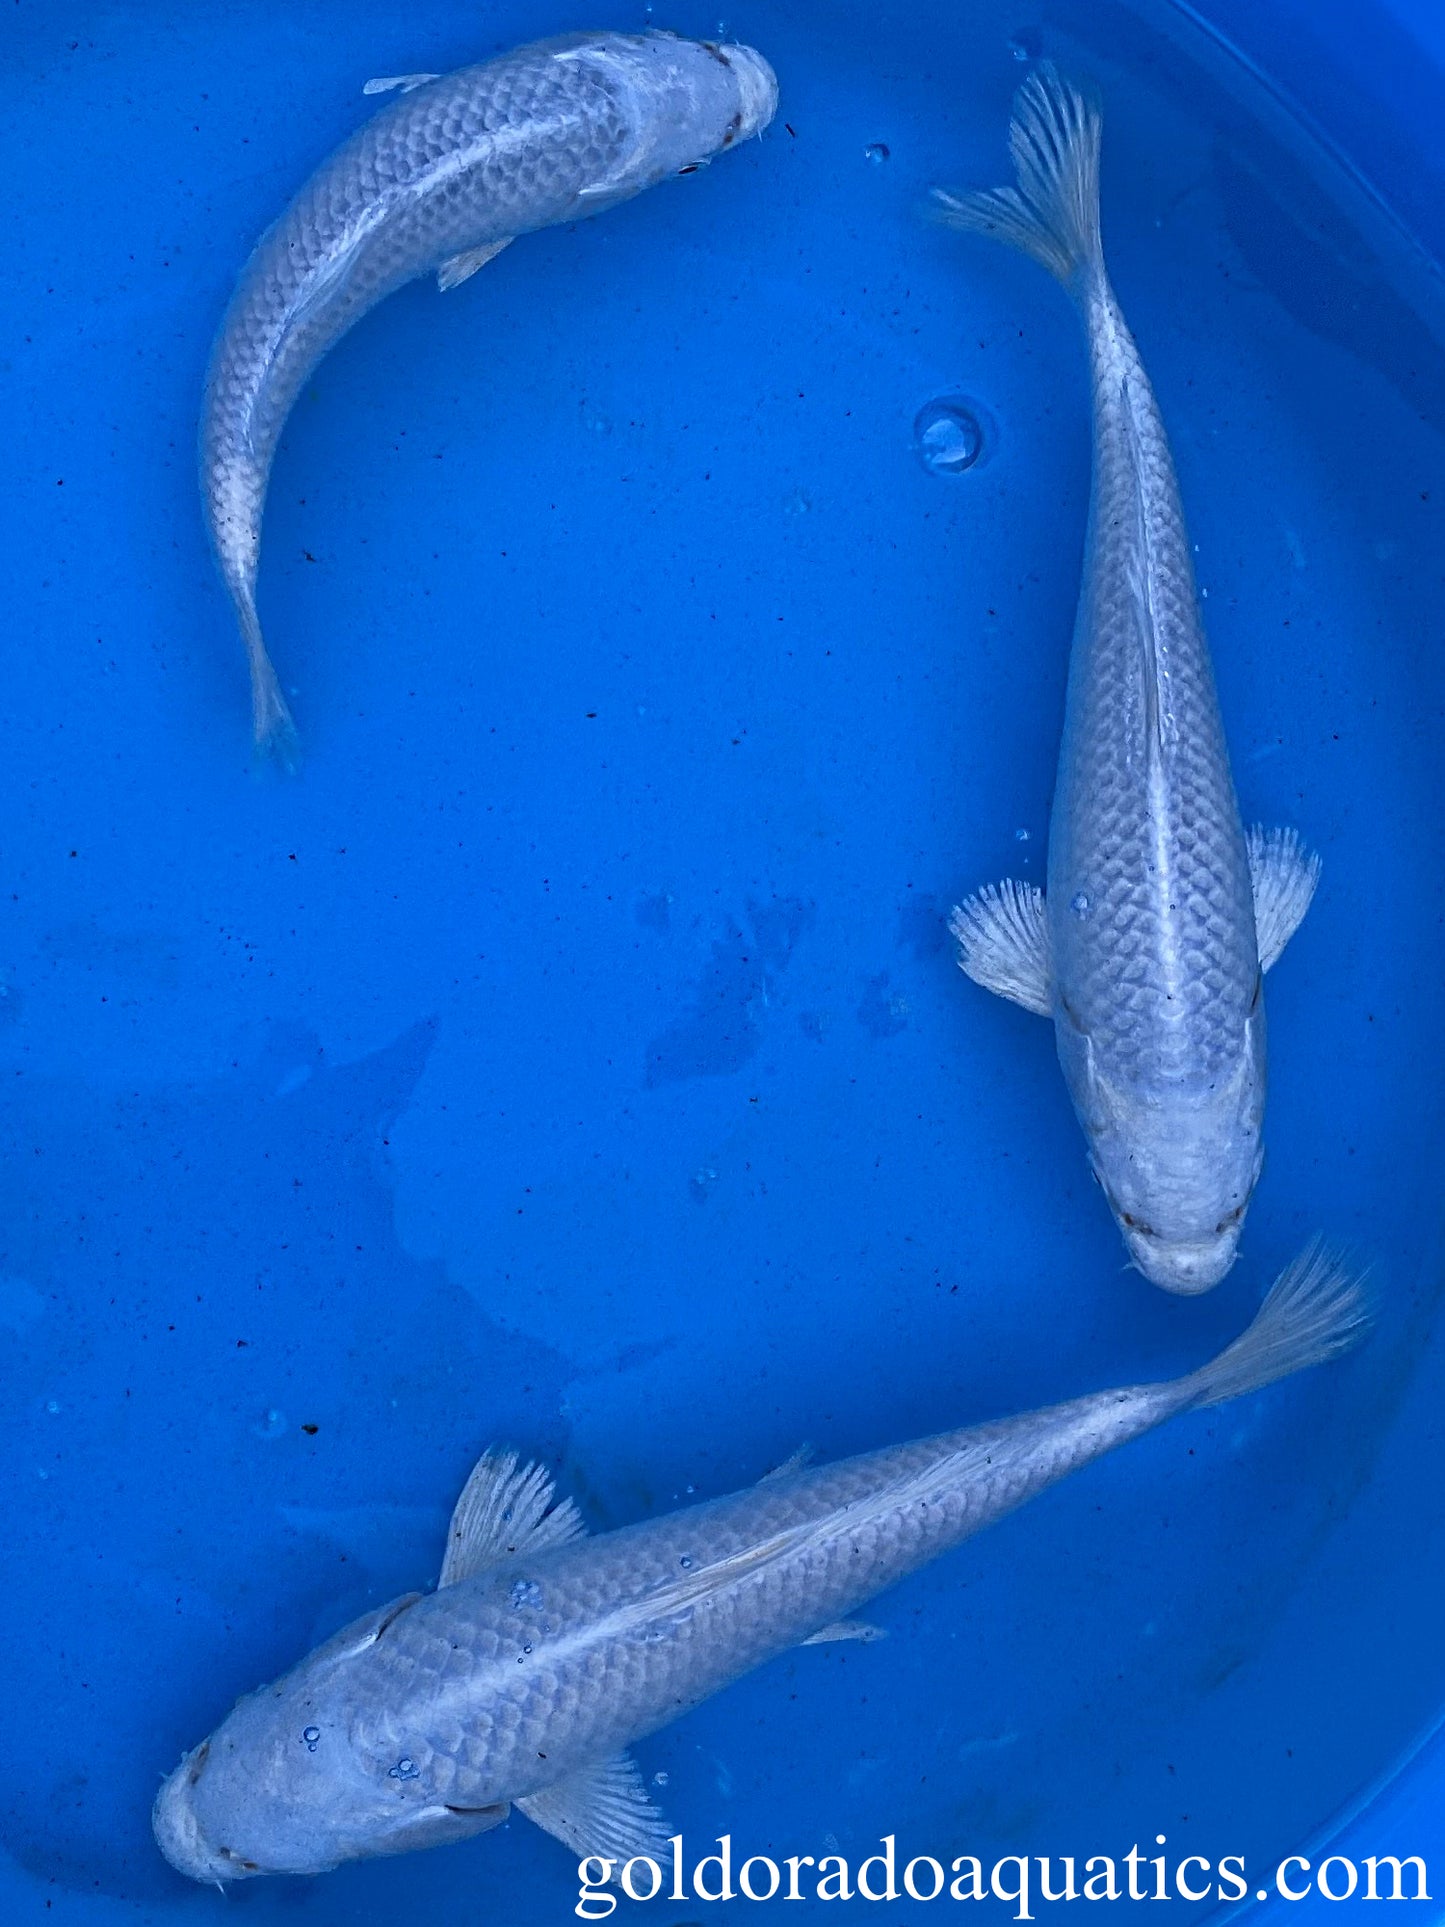 Image of a Platinum Ogon koi fish. A pure white metallic koi fish.